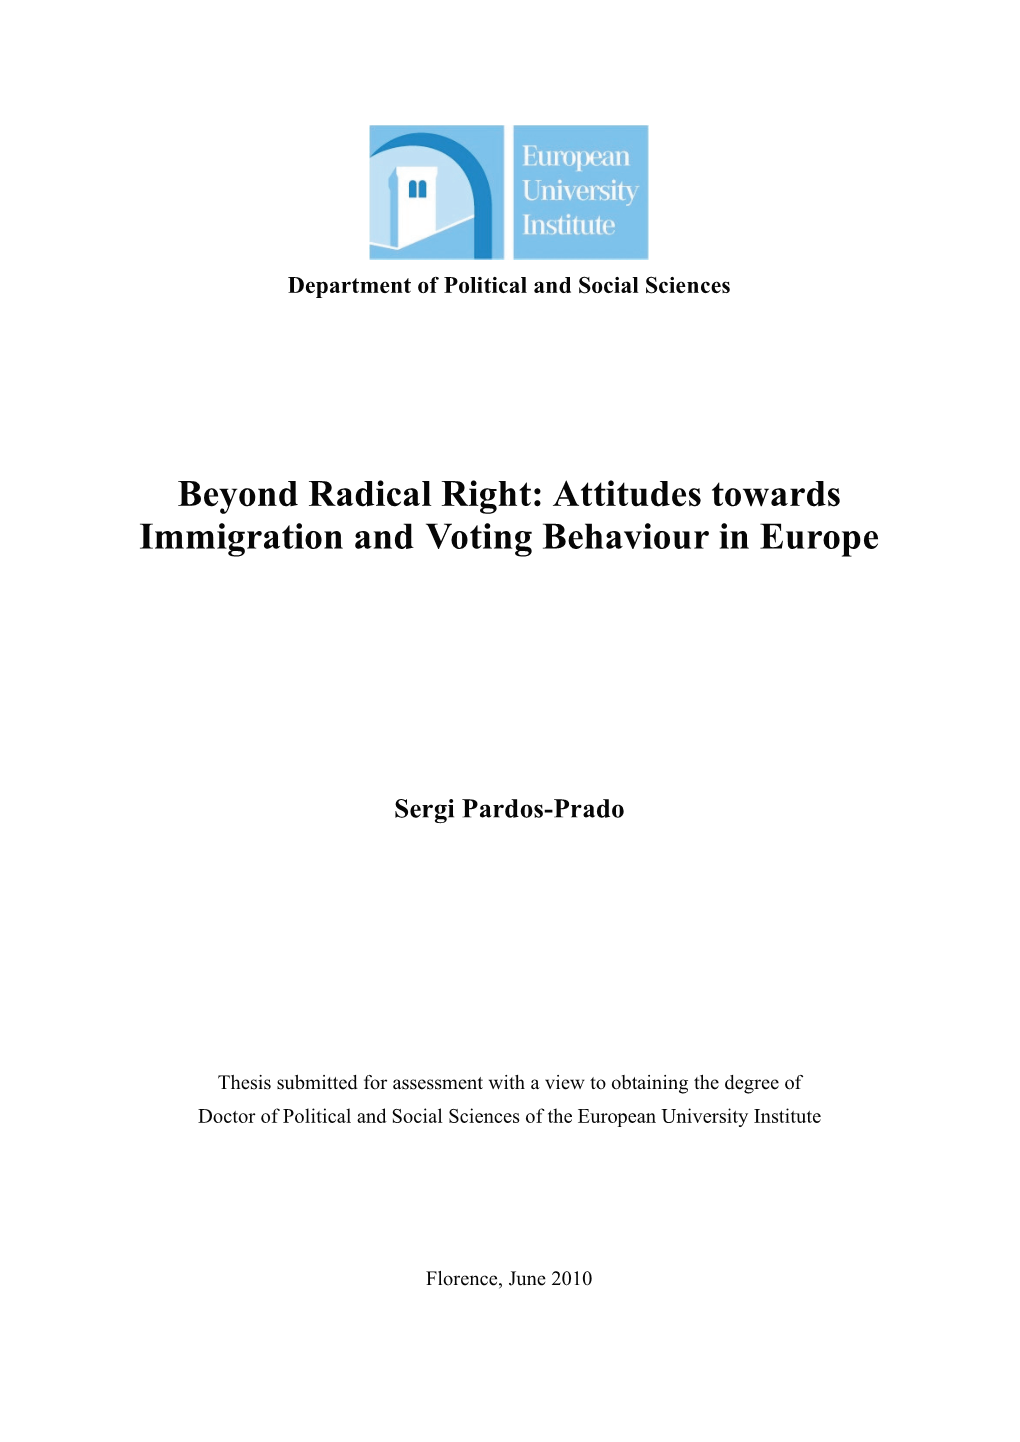 Attitudes Towards Immigration and Voting Behaviour in Europe